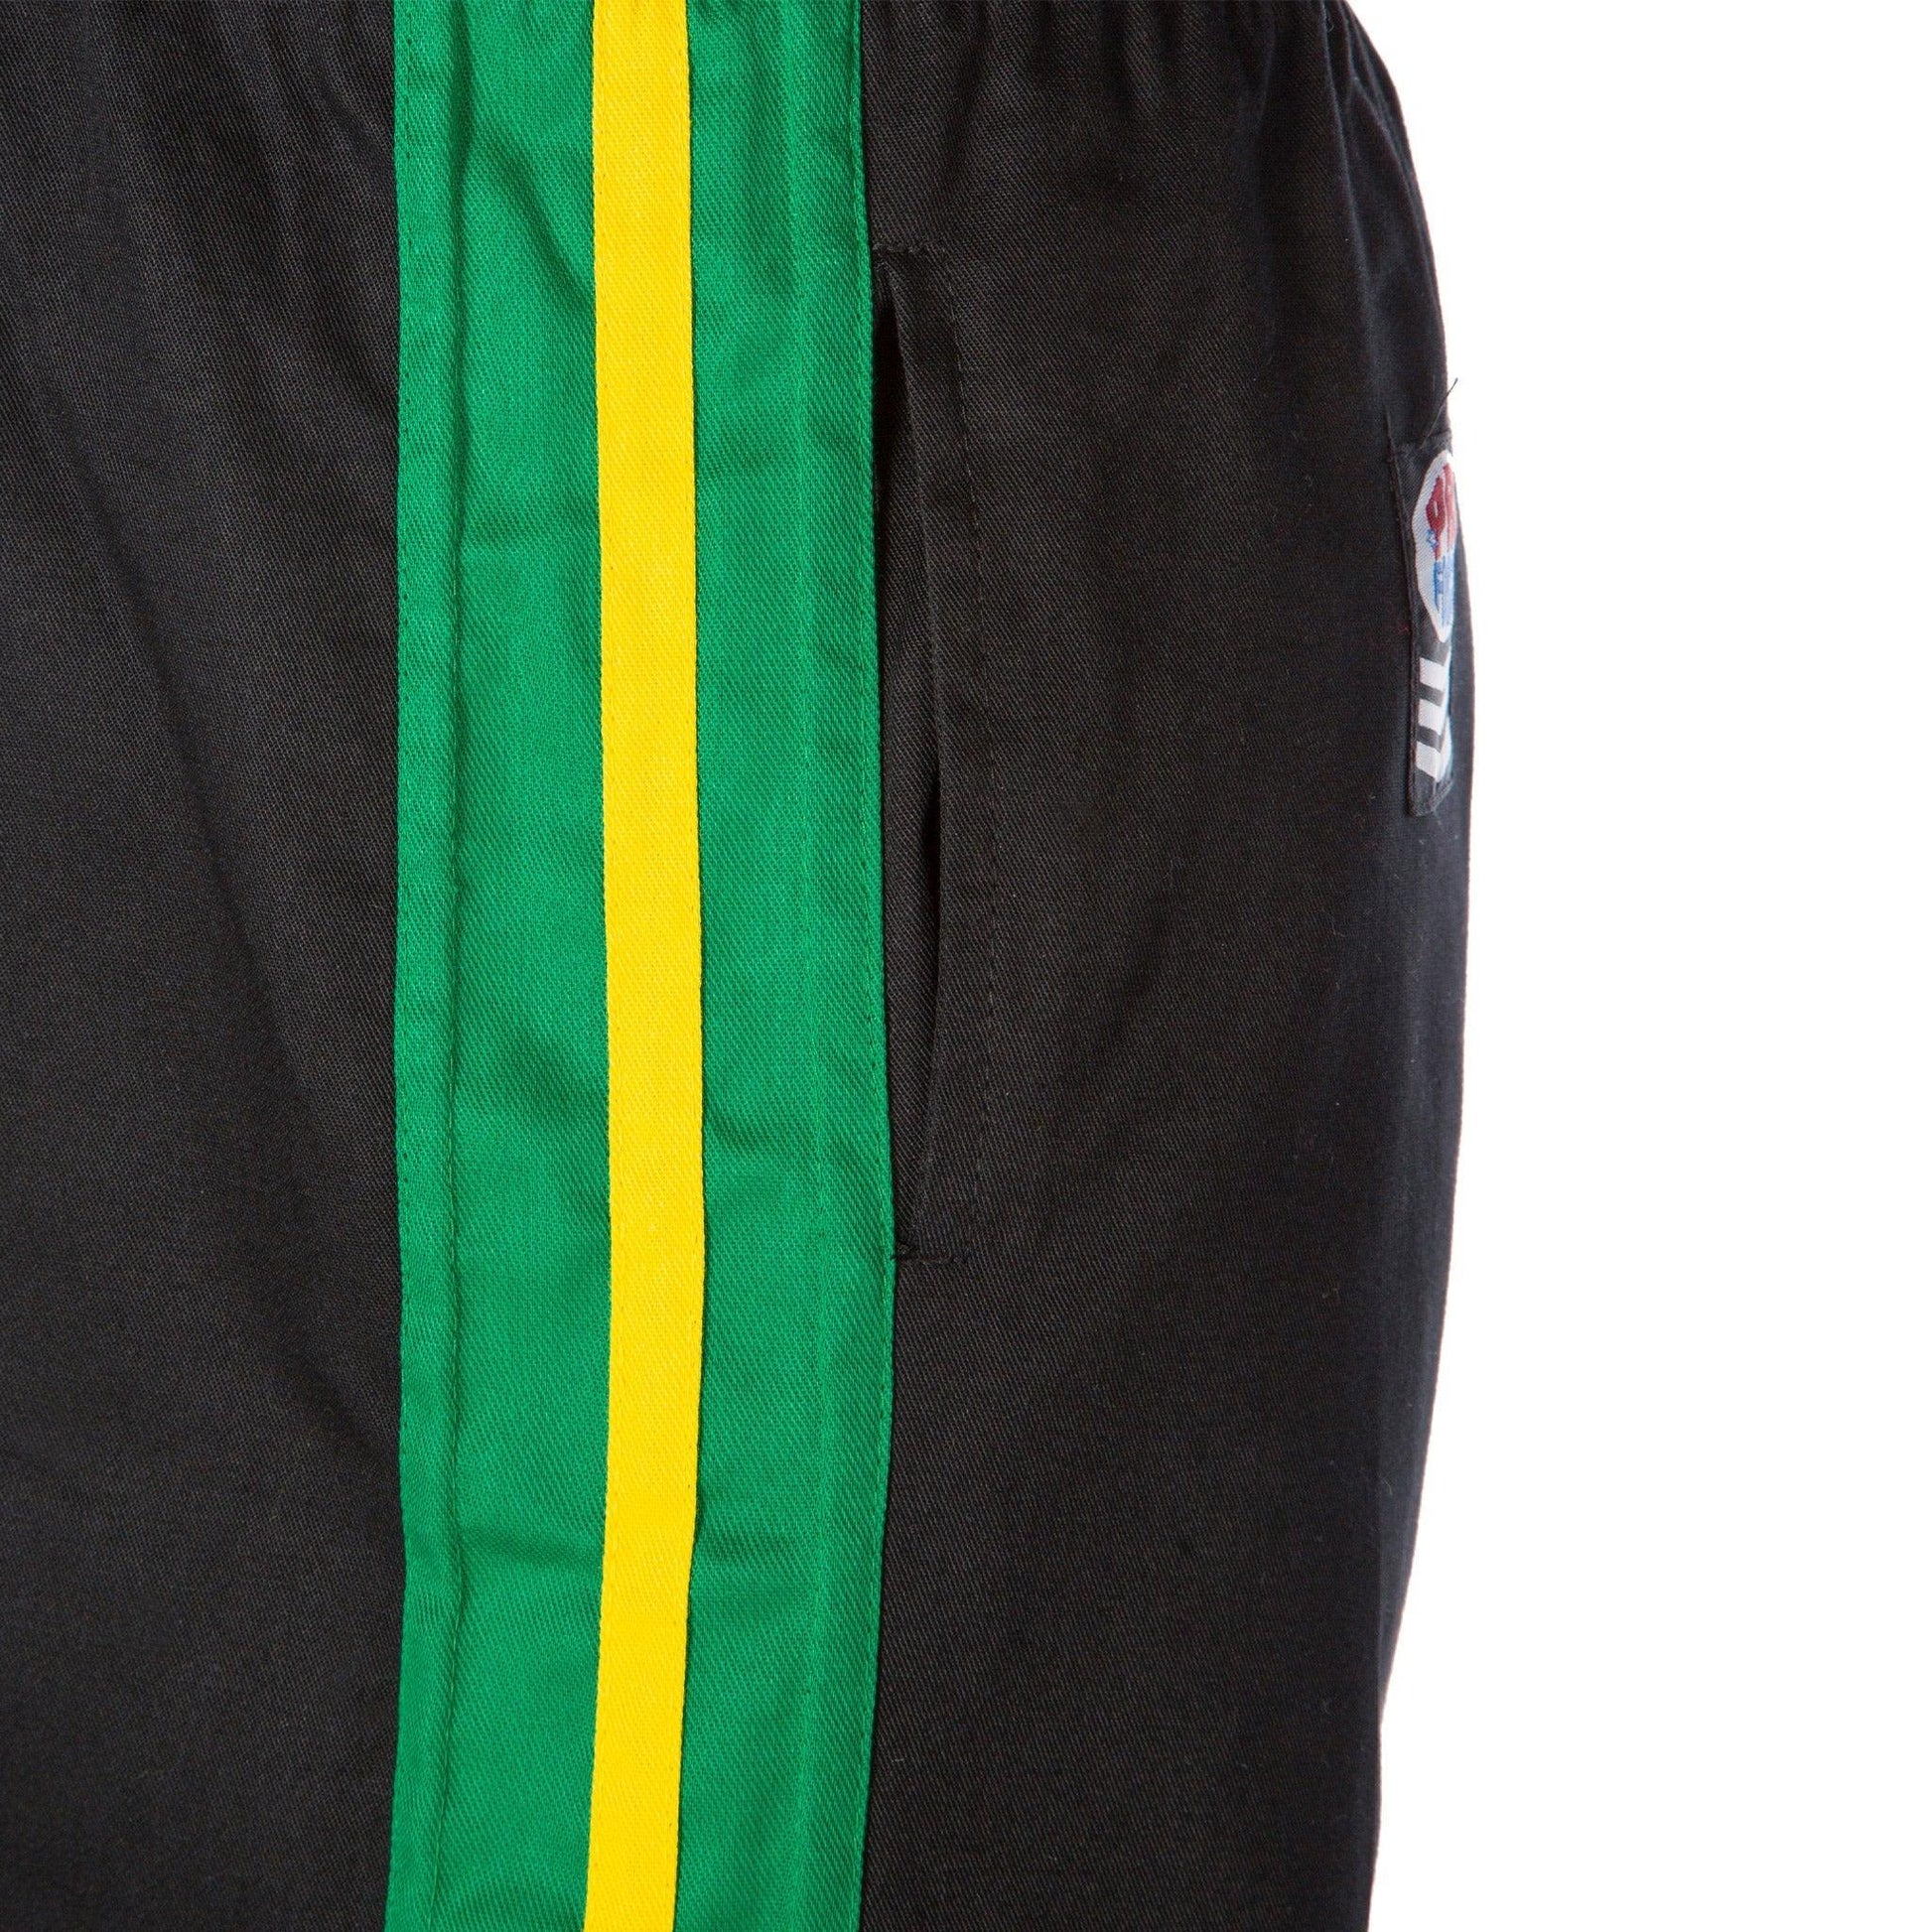 ProForce Sport Black with Green & Yellow Stripes Demo Pants - Violent Art Shop